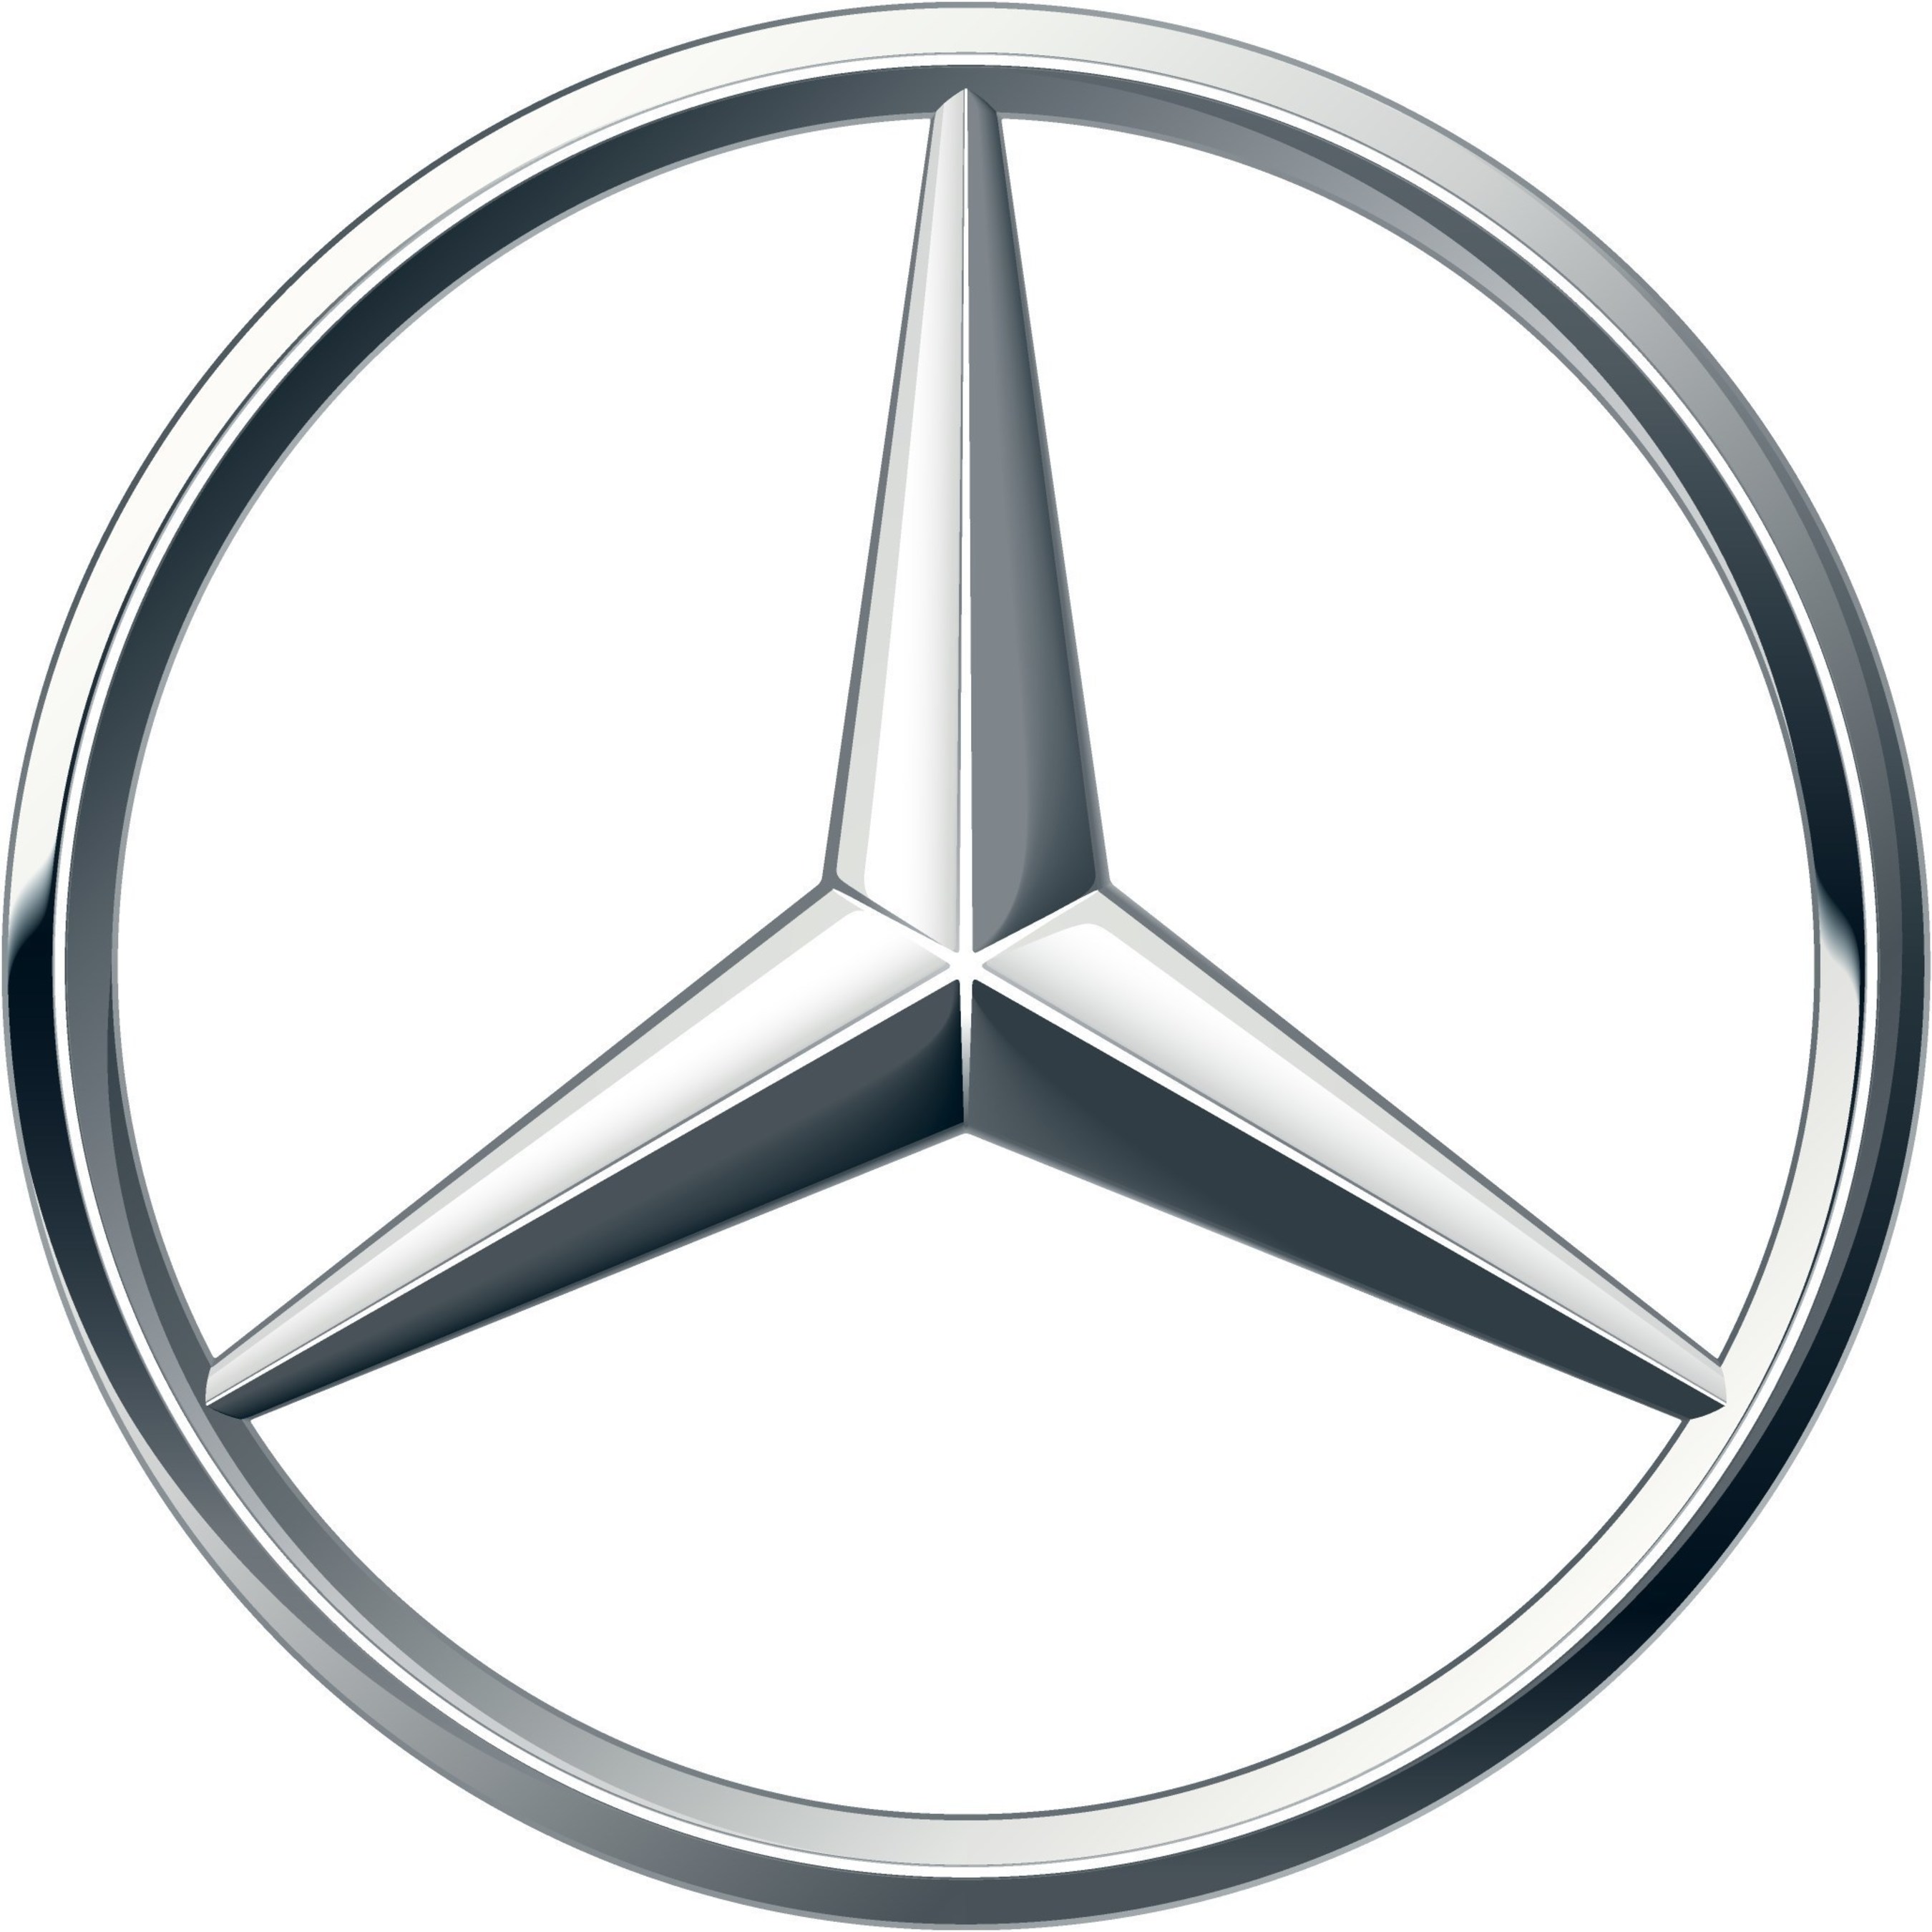 Mercedes-Benz (PRNewsFoto/Mercedes-Benz USA)